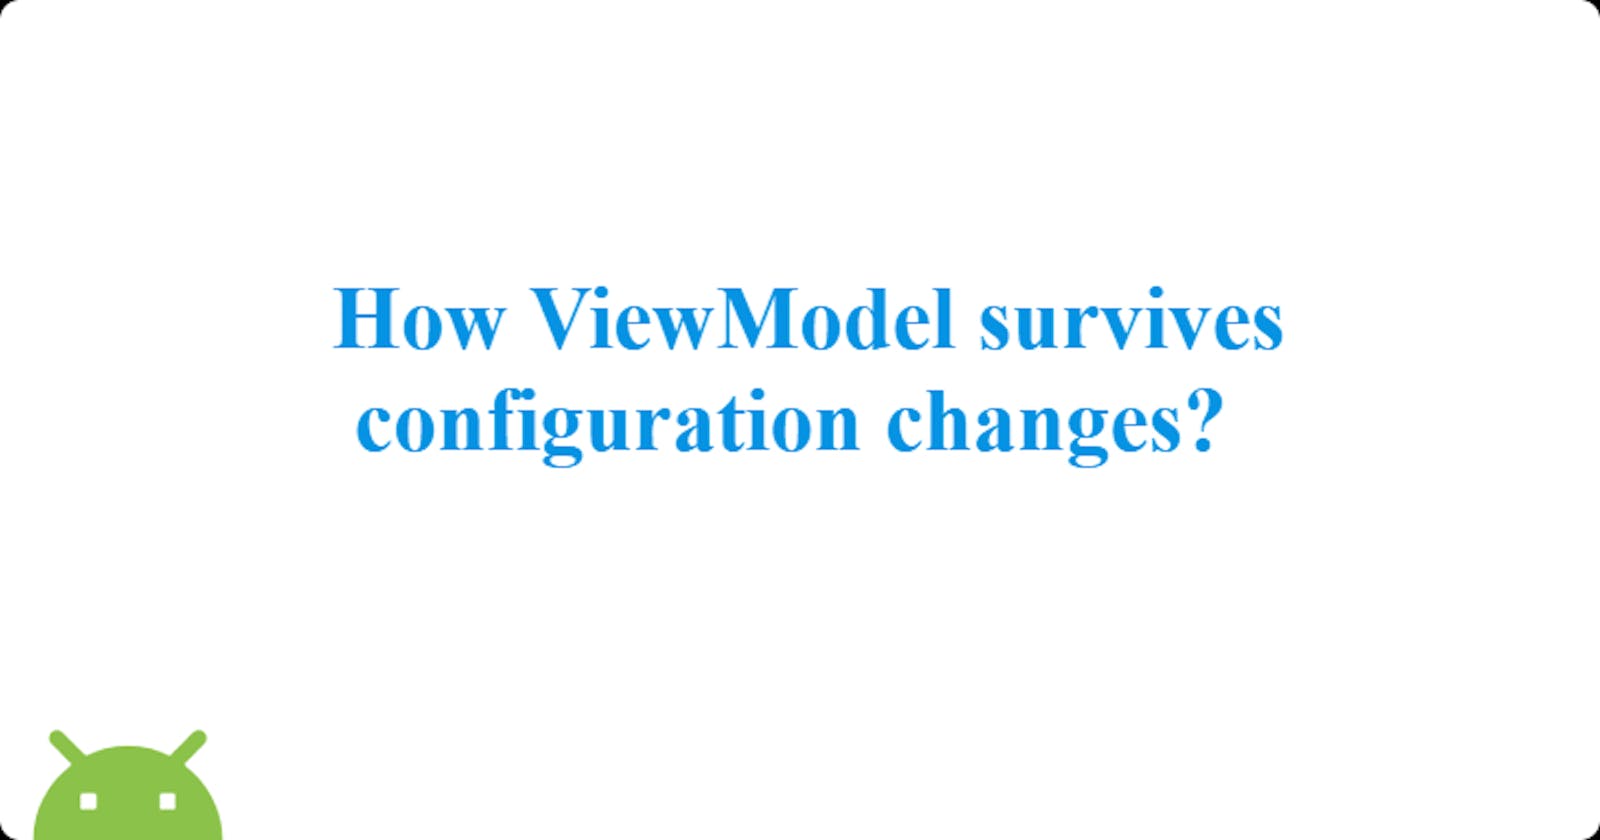 How ViewModel survives configuration change?